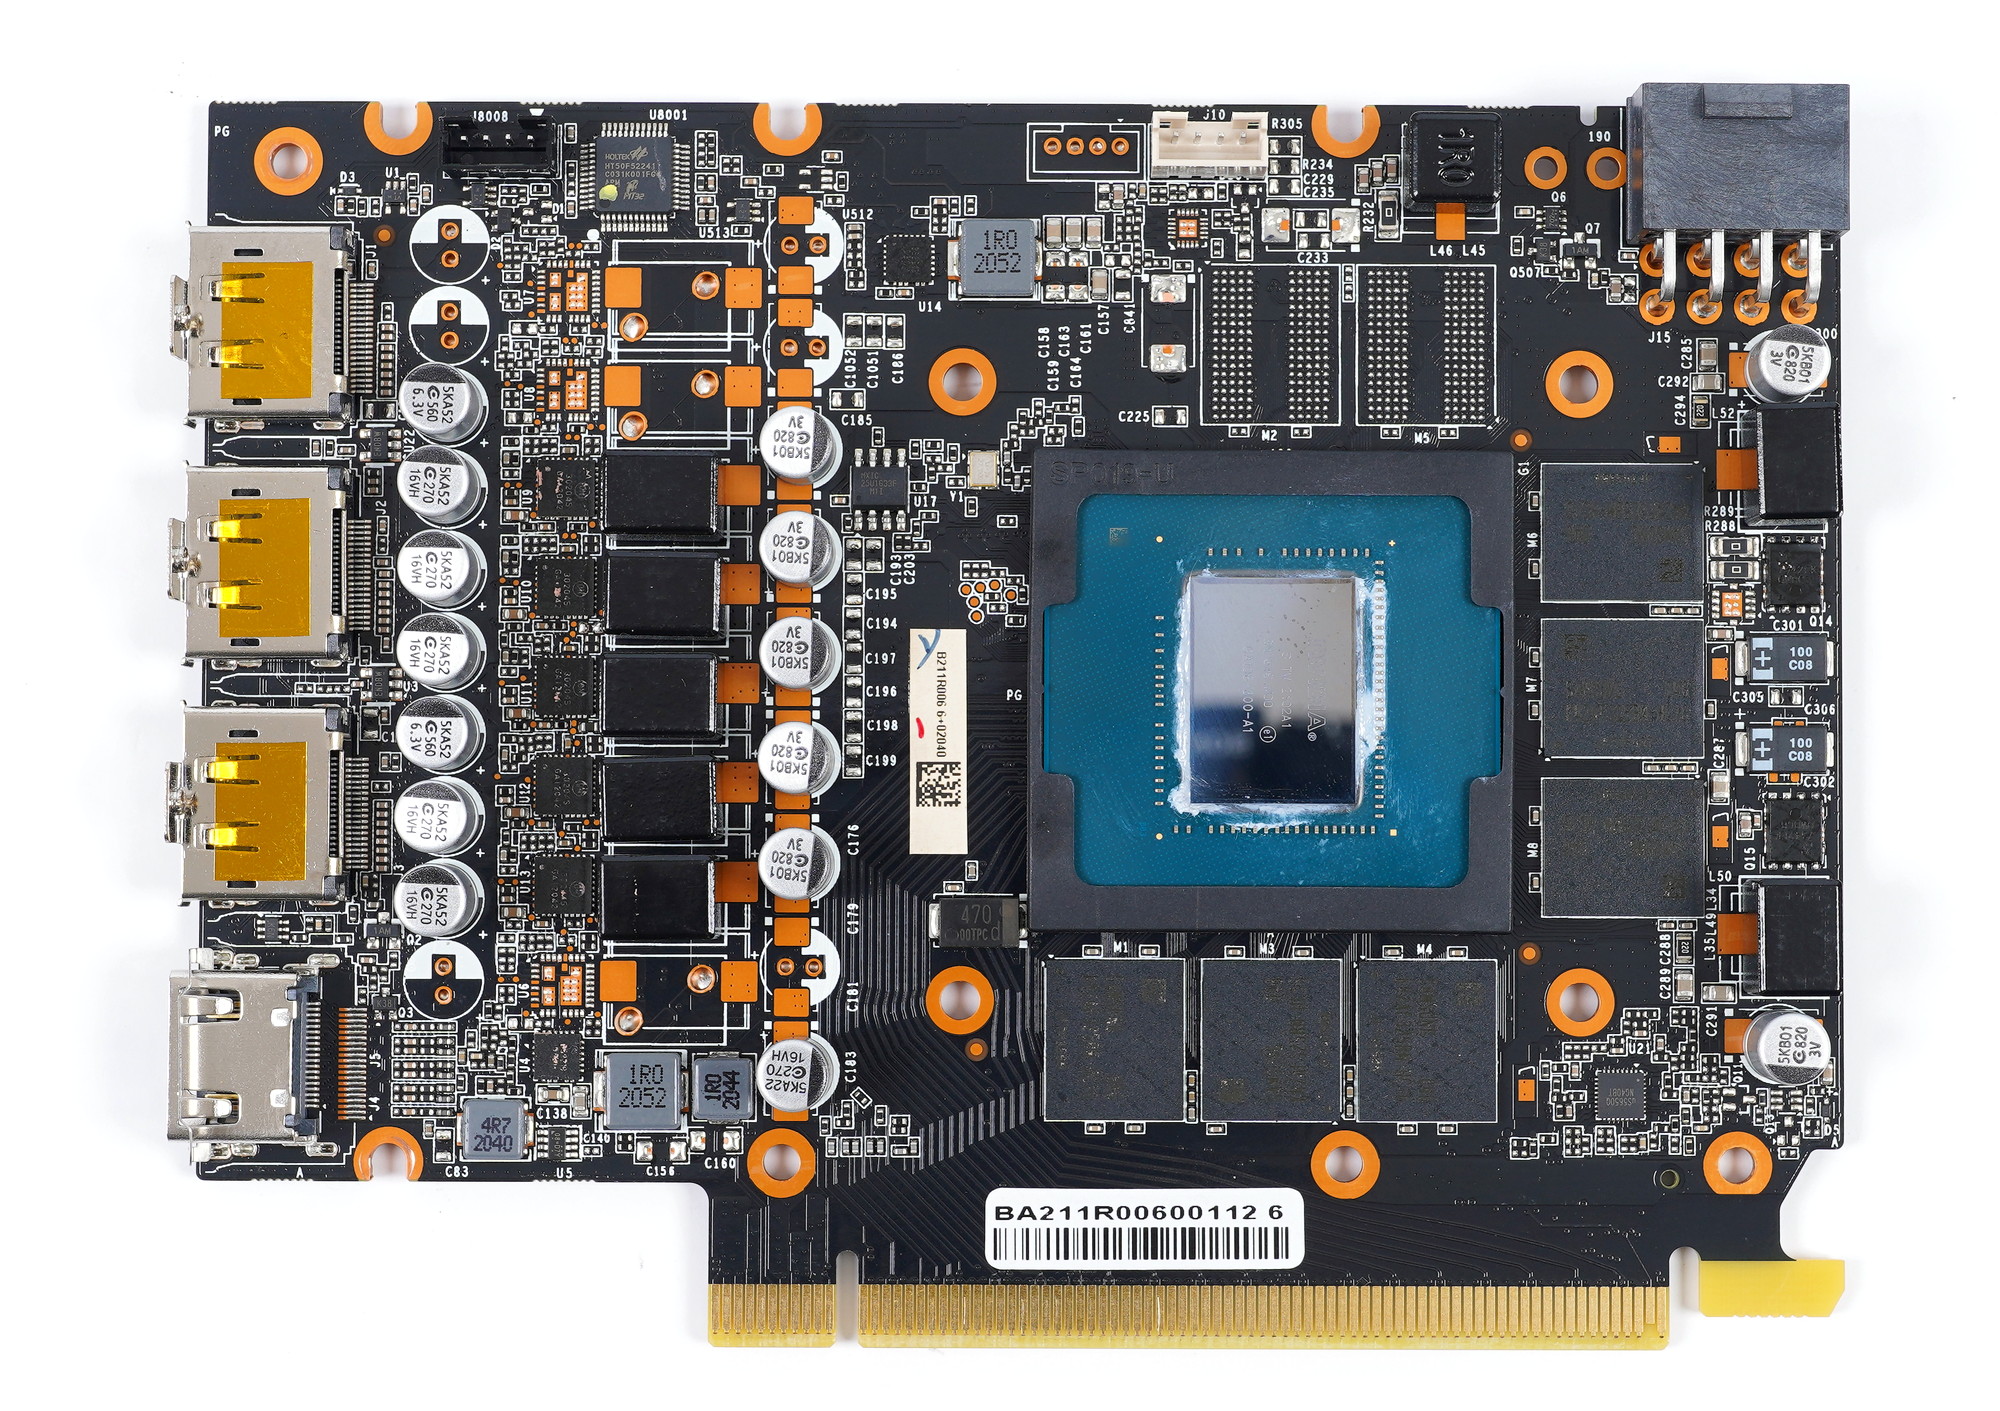 「Palit GeForce RTX 3060 StormX OC 12GB」をレビュー。RTX30シリーズ初のMini-ITX完全対応